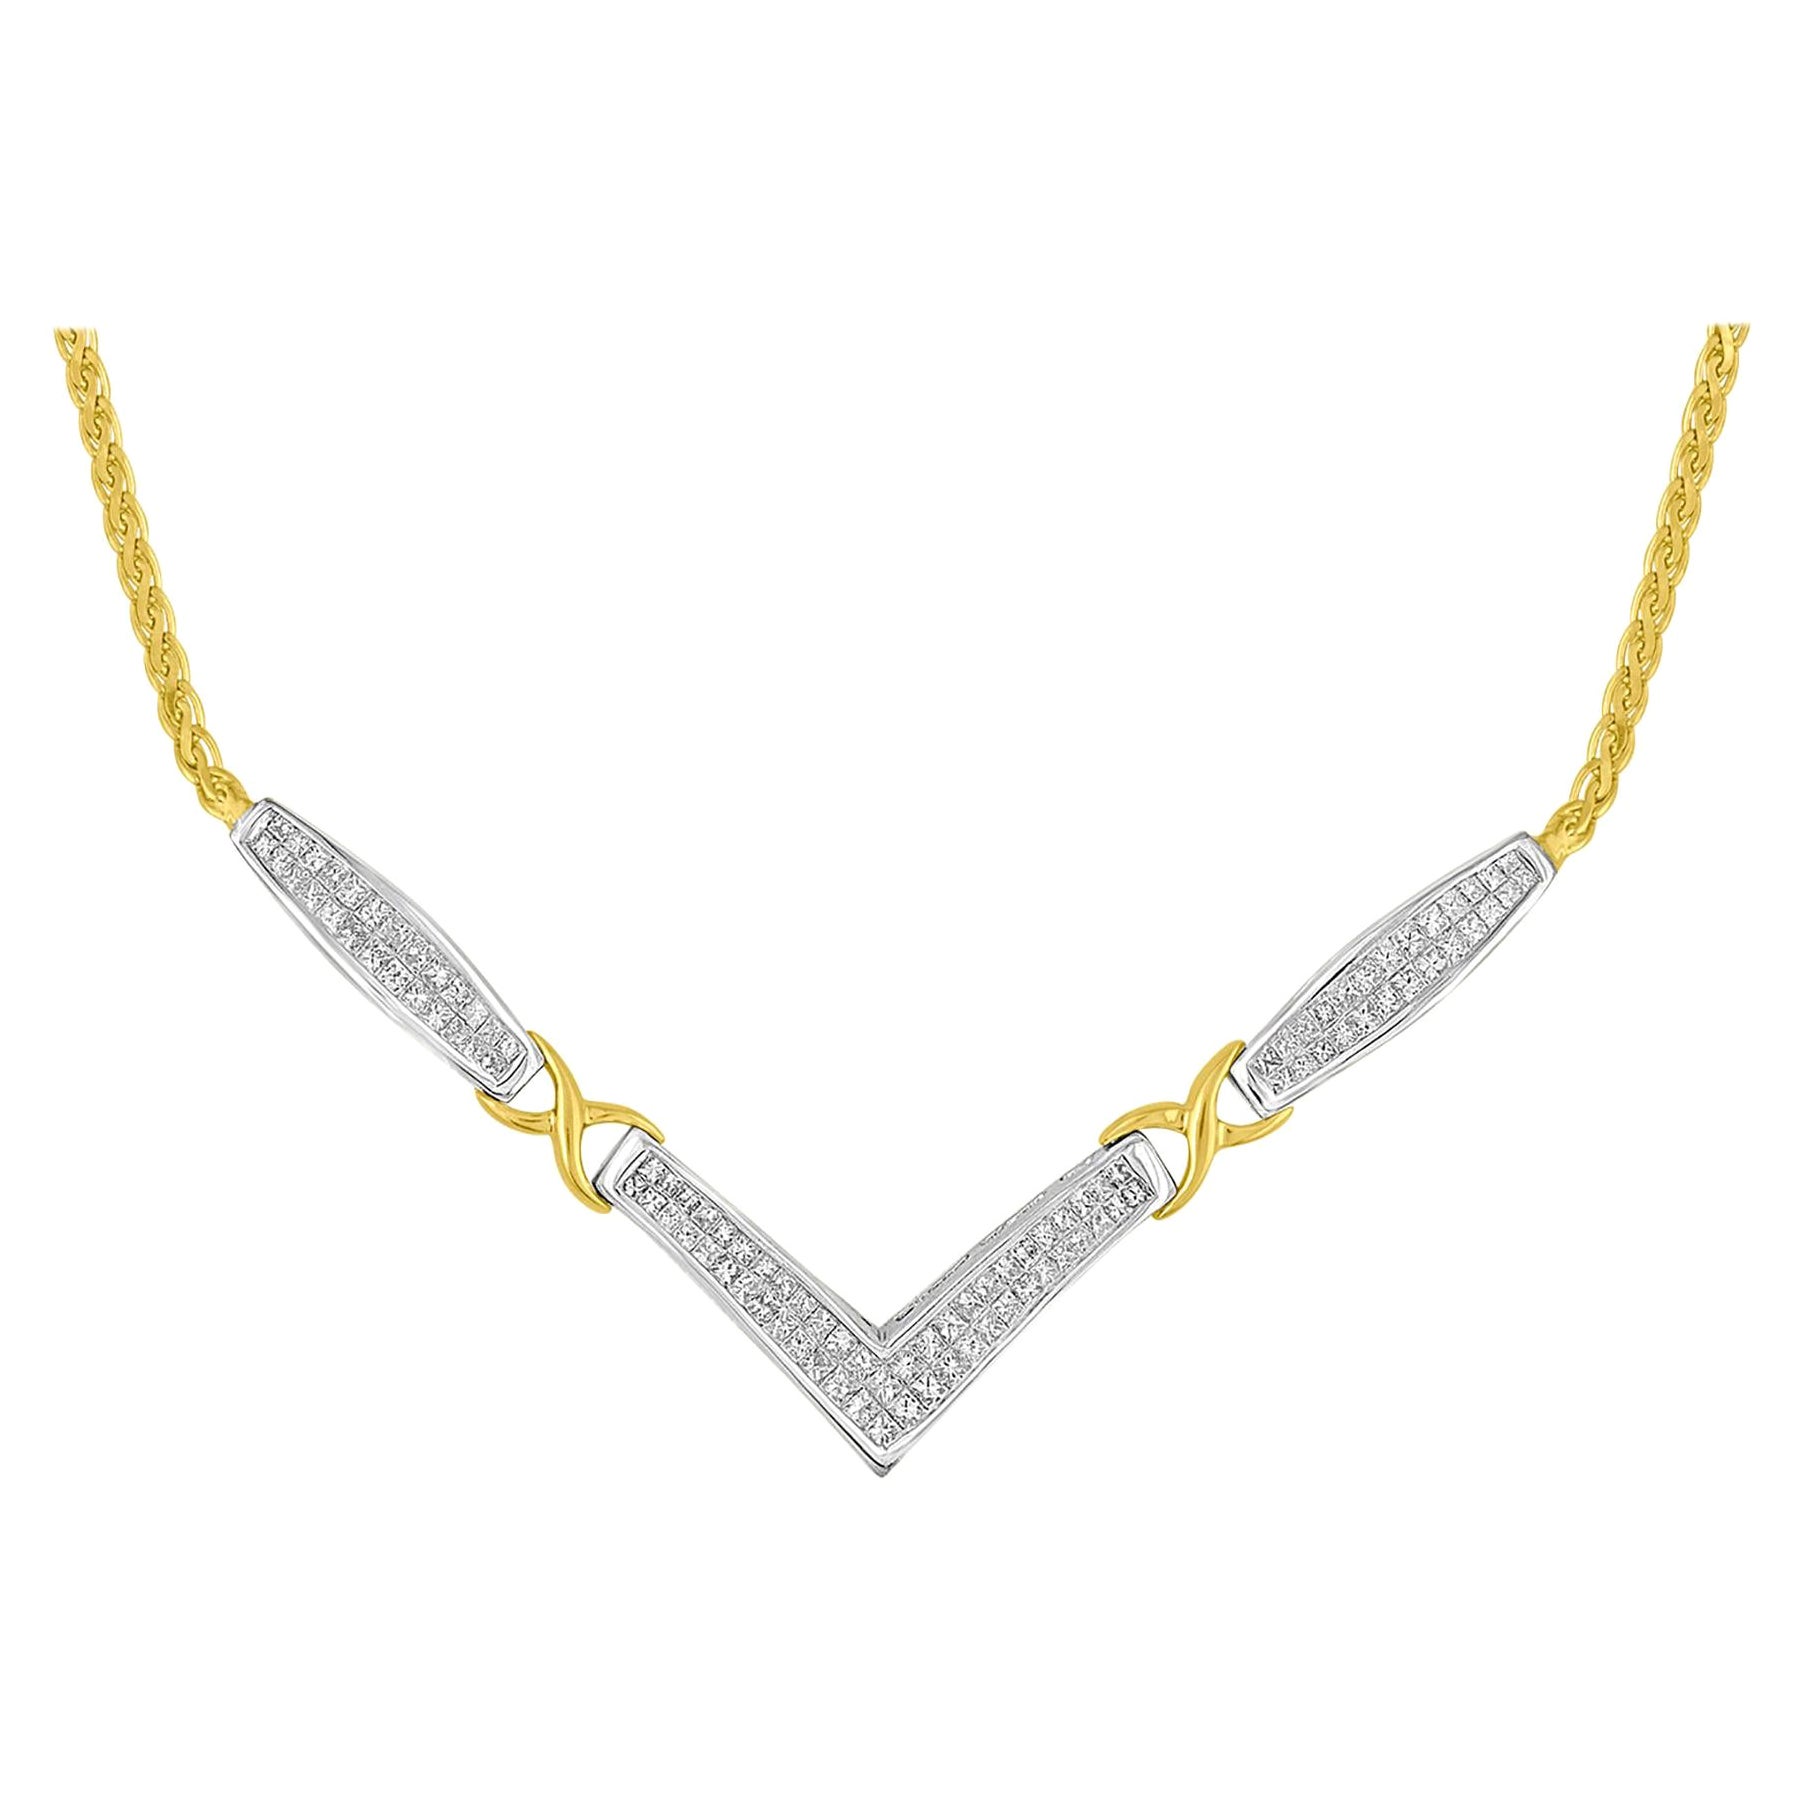 14k Yellow and White Gold 2.0 Carat Diamond "V" Shape Statement Necklace